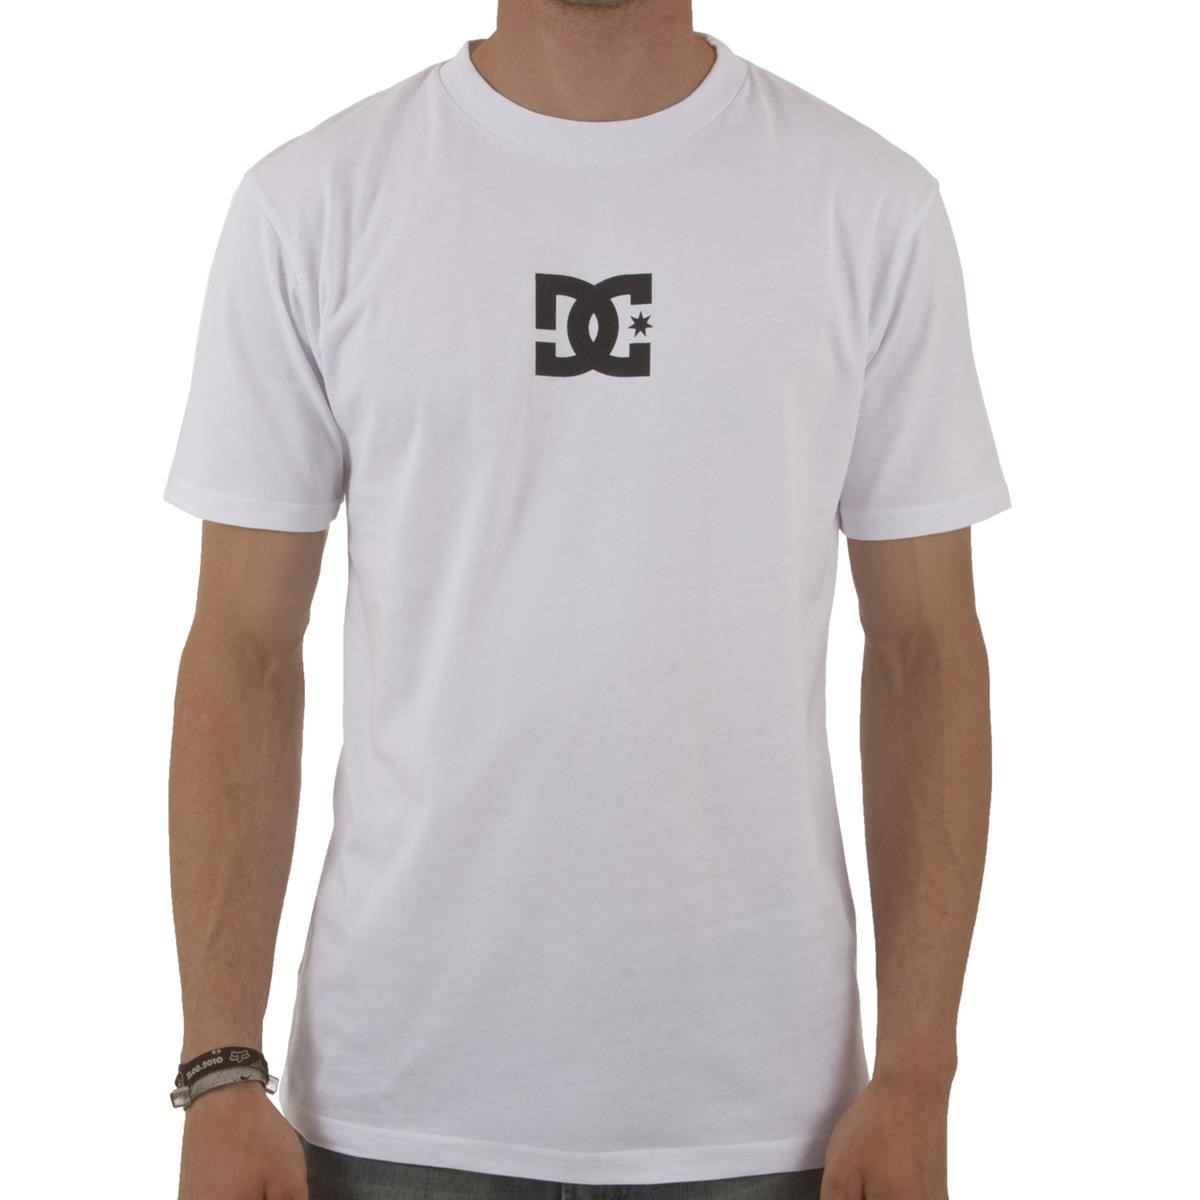 Freizeit/Streetwear Bekleidung-T-Shirts/Polos - DC T-Shirt Solo Star White